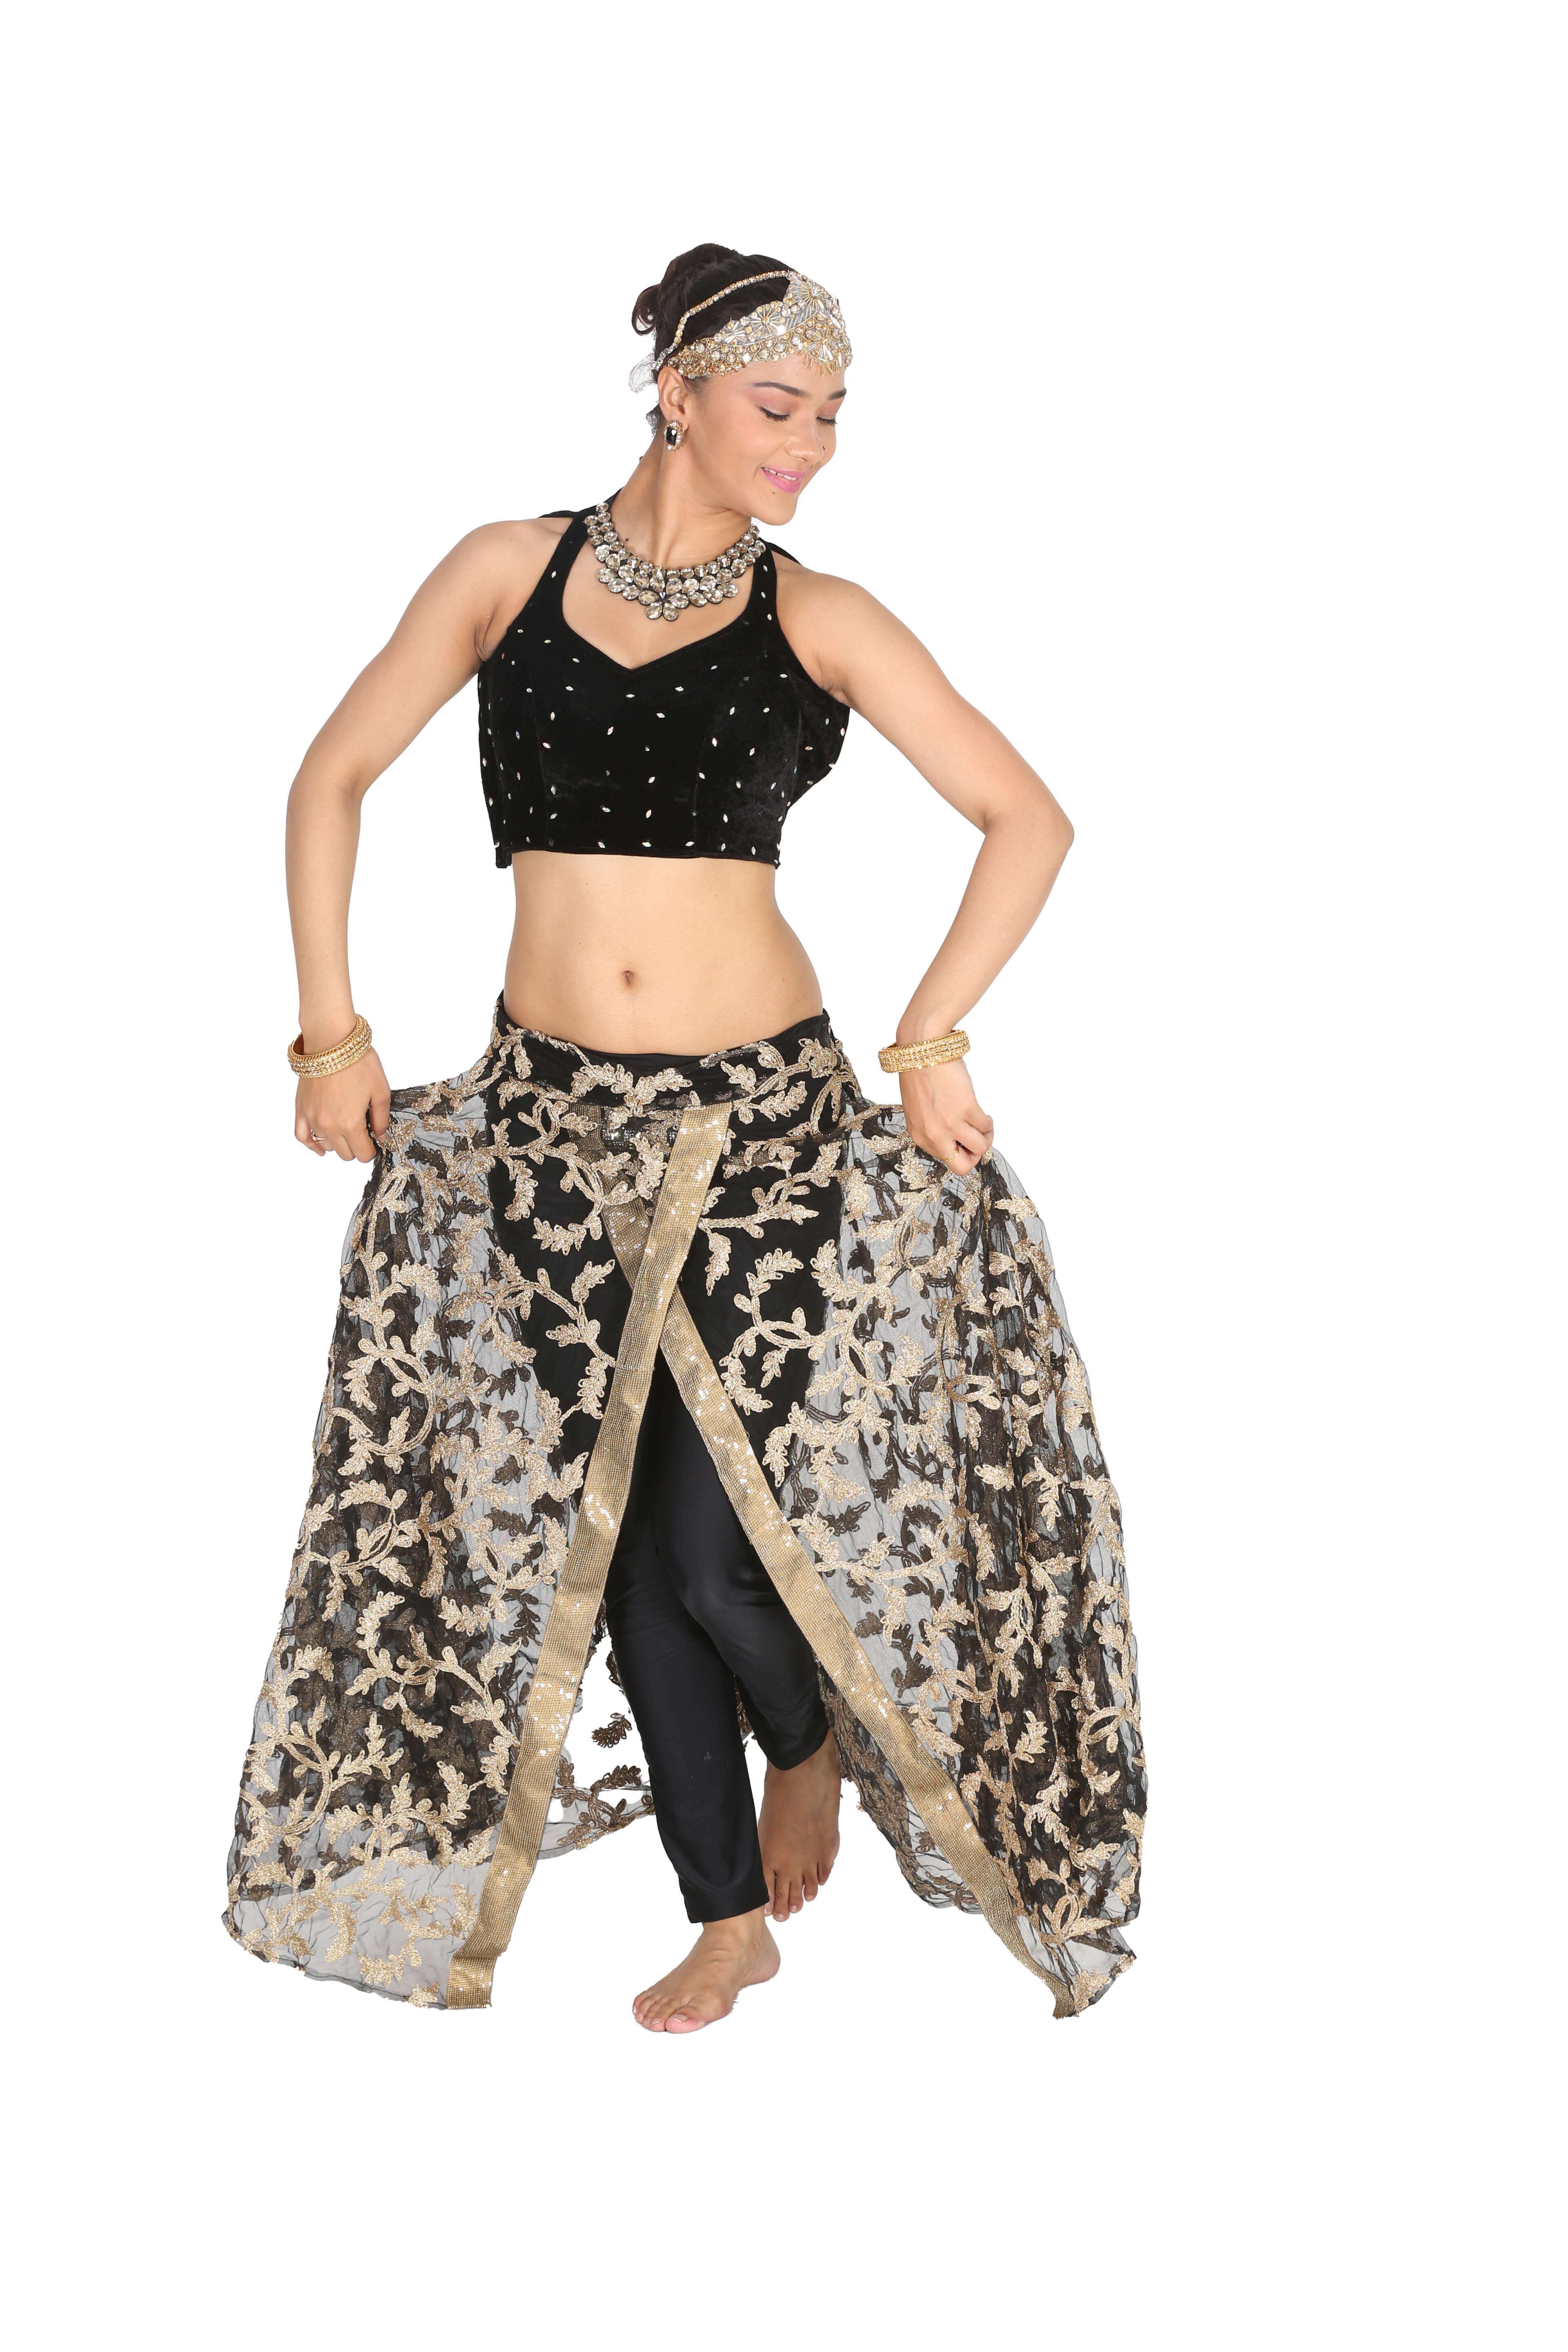 Choice Available Polyester Jaipur Gharana Kathak Dance Costumes